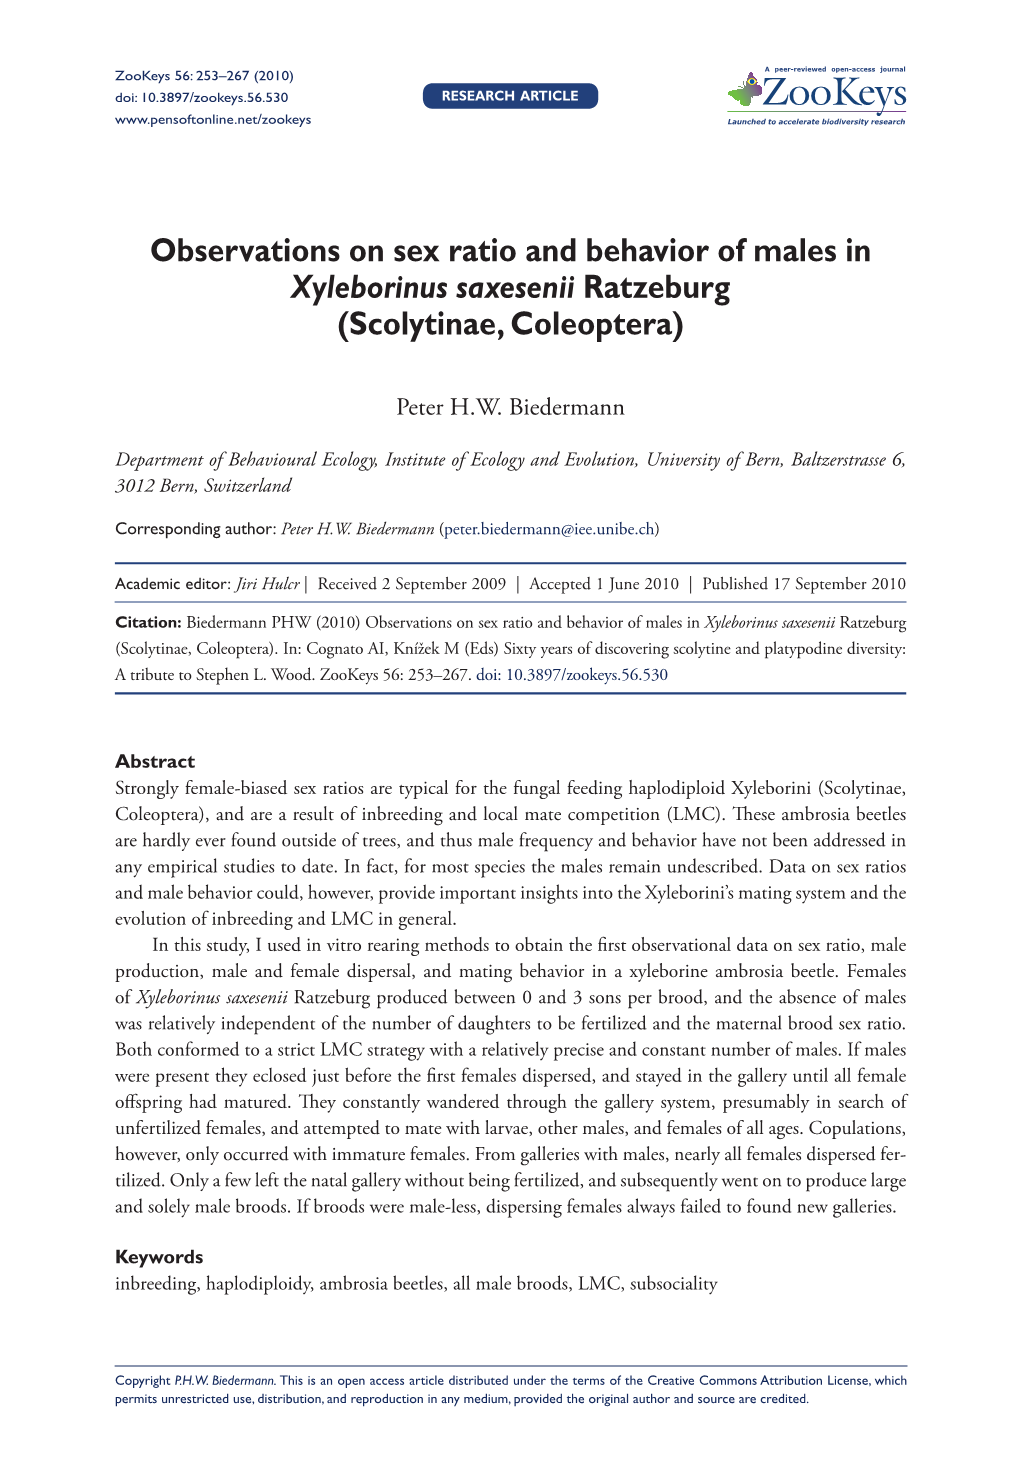 Observations on Sex Ratio and Behavior of Males in Xyleborinus Saxesenii Ratzeburg (Scolytinae, Coleoptera)